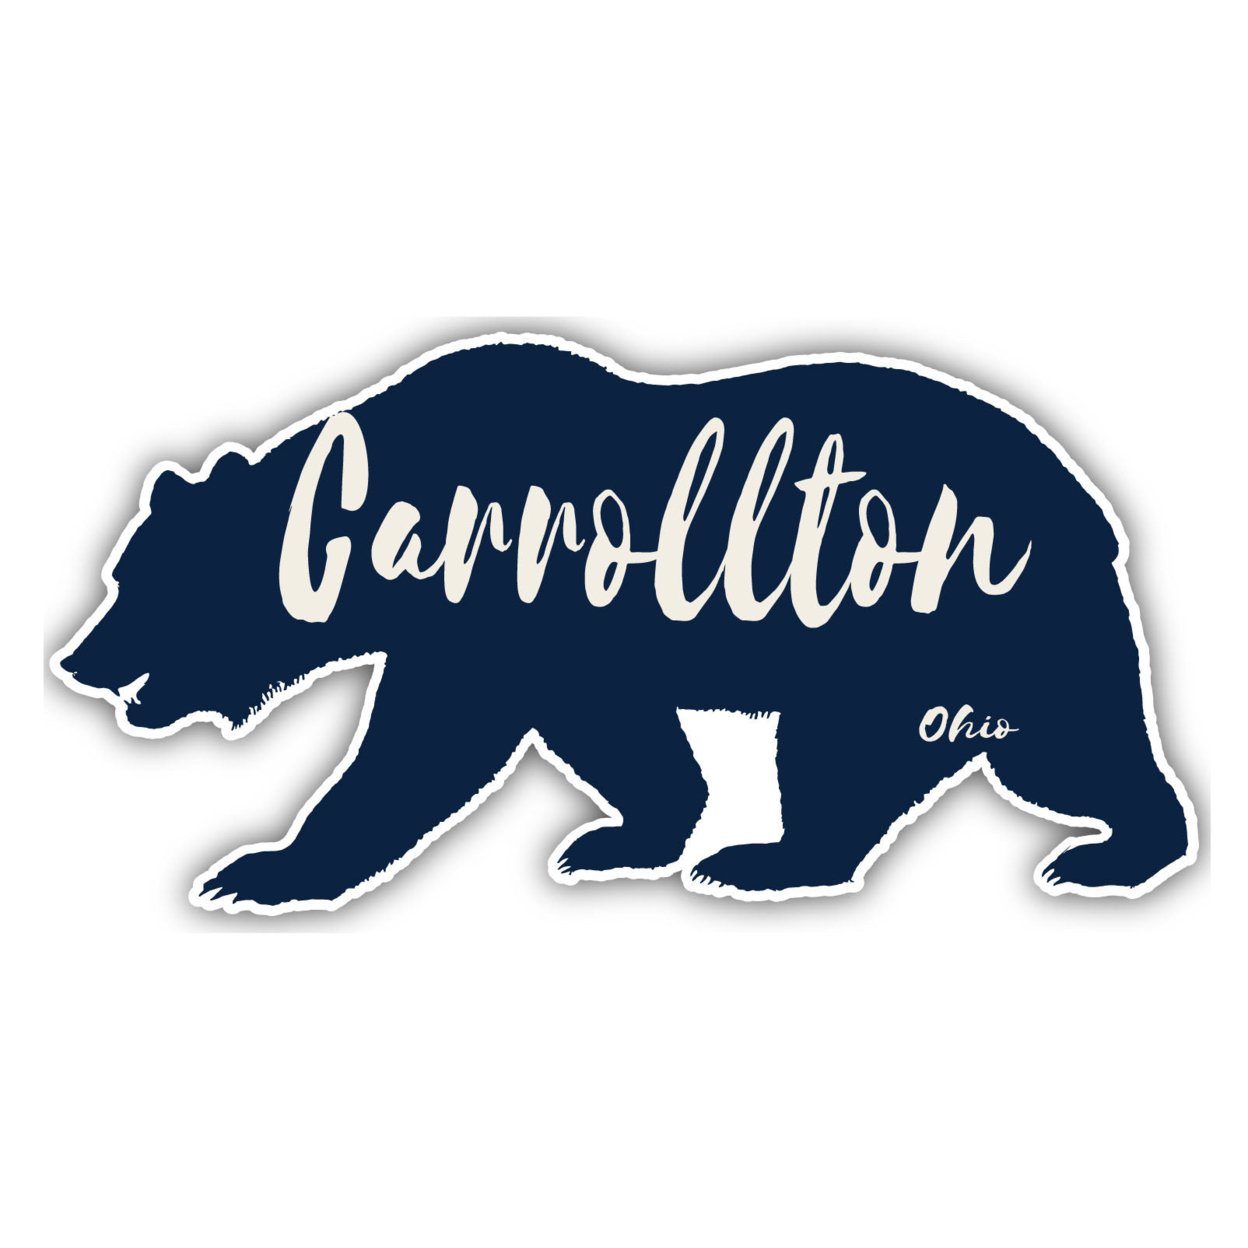 Carrollton Ohio Souvenir Decorative Stickers (Choose Theme And Size) - Single Unit, 8-Inch, Bear